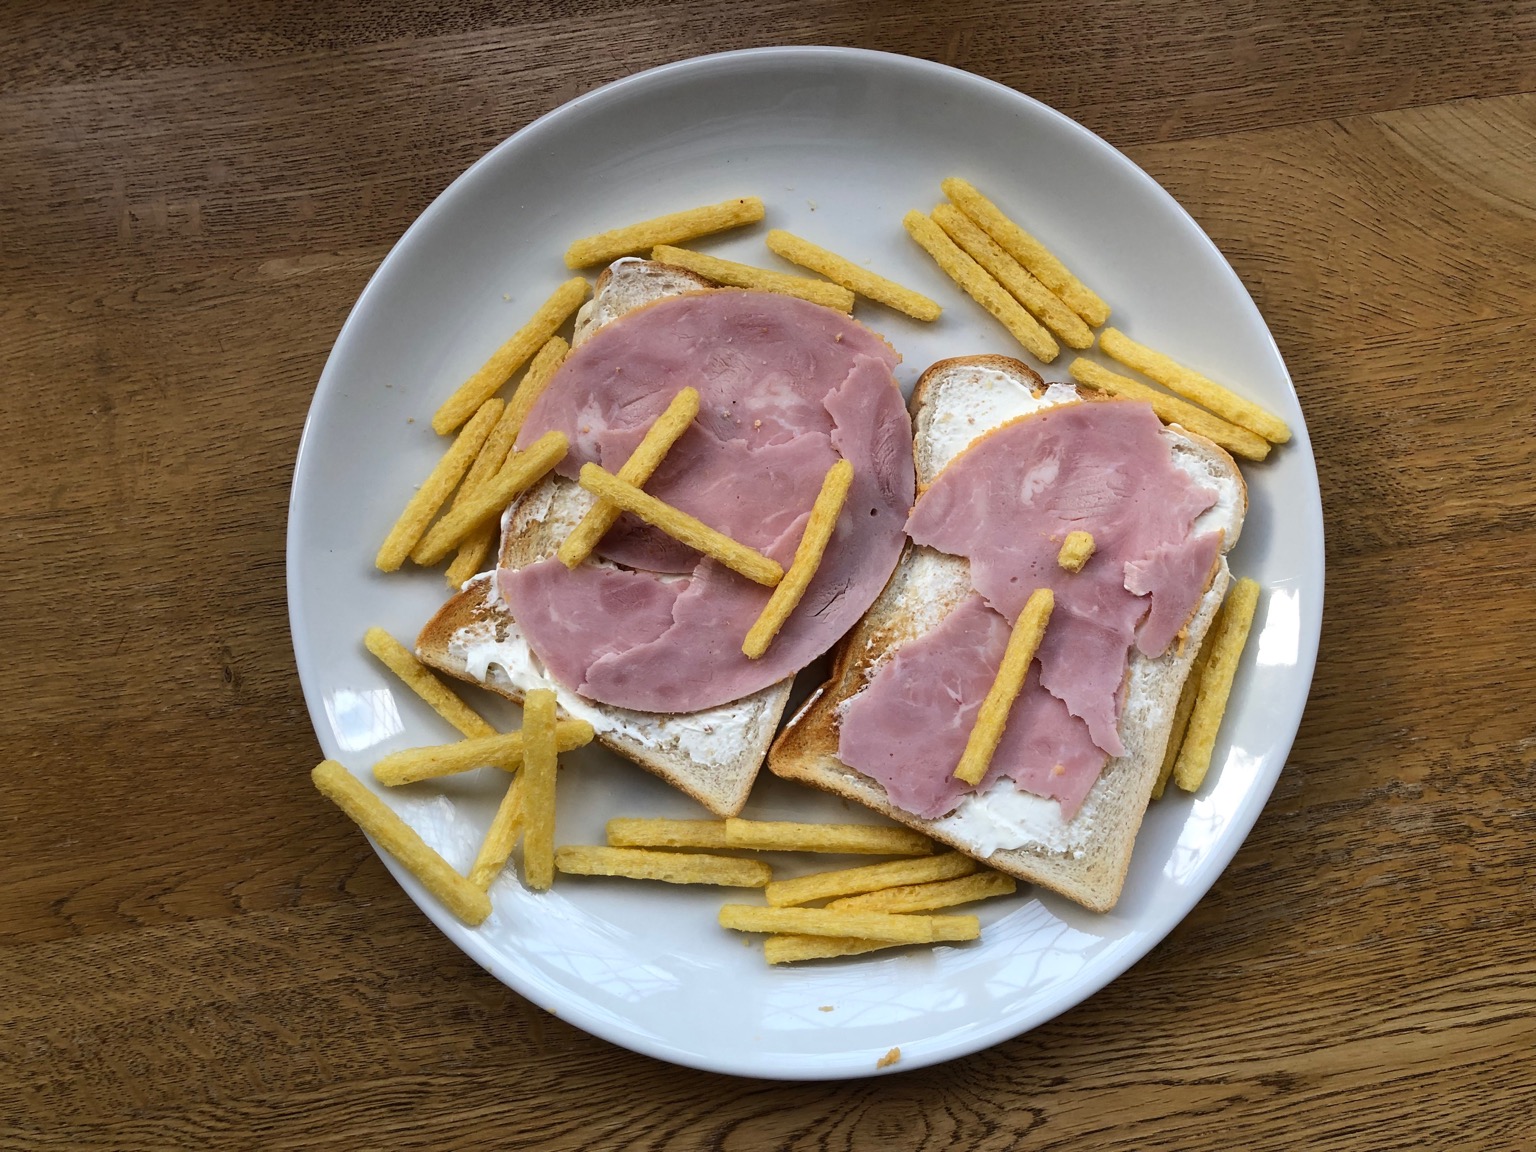 Chipsticks spelling "Hi" on ham on white toast